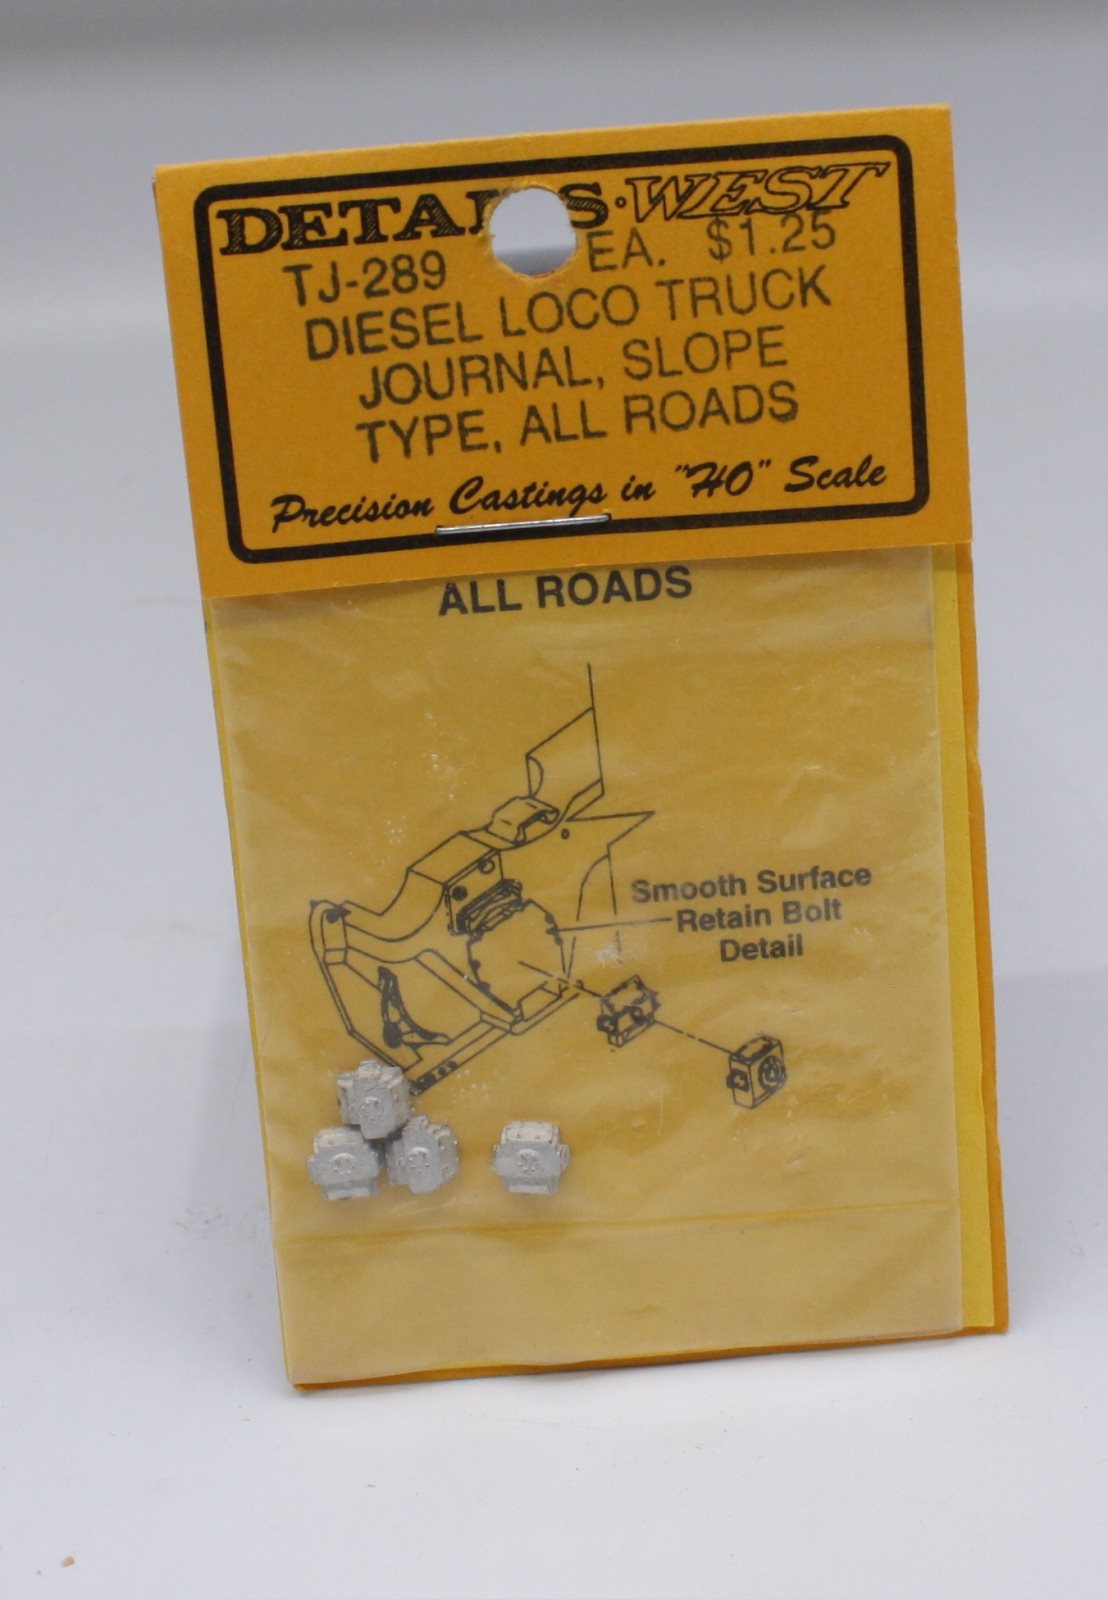 Details West 289 HO Diesel Loco Truck Journal, Slope, Type, All Roads